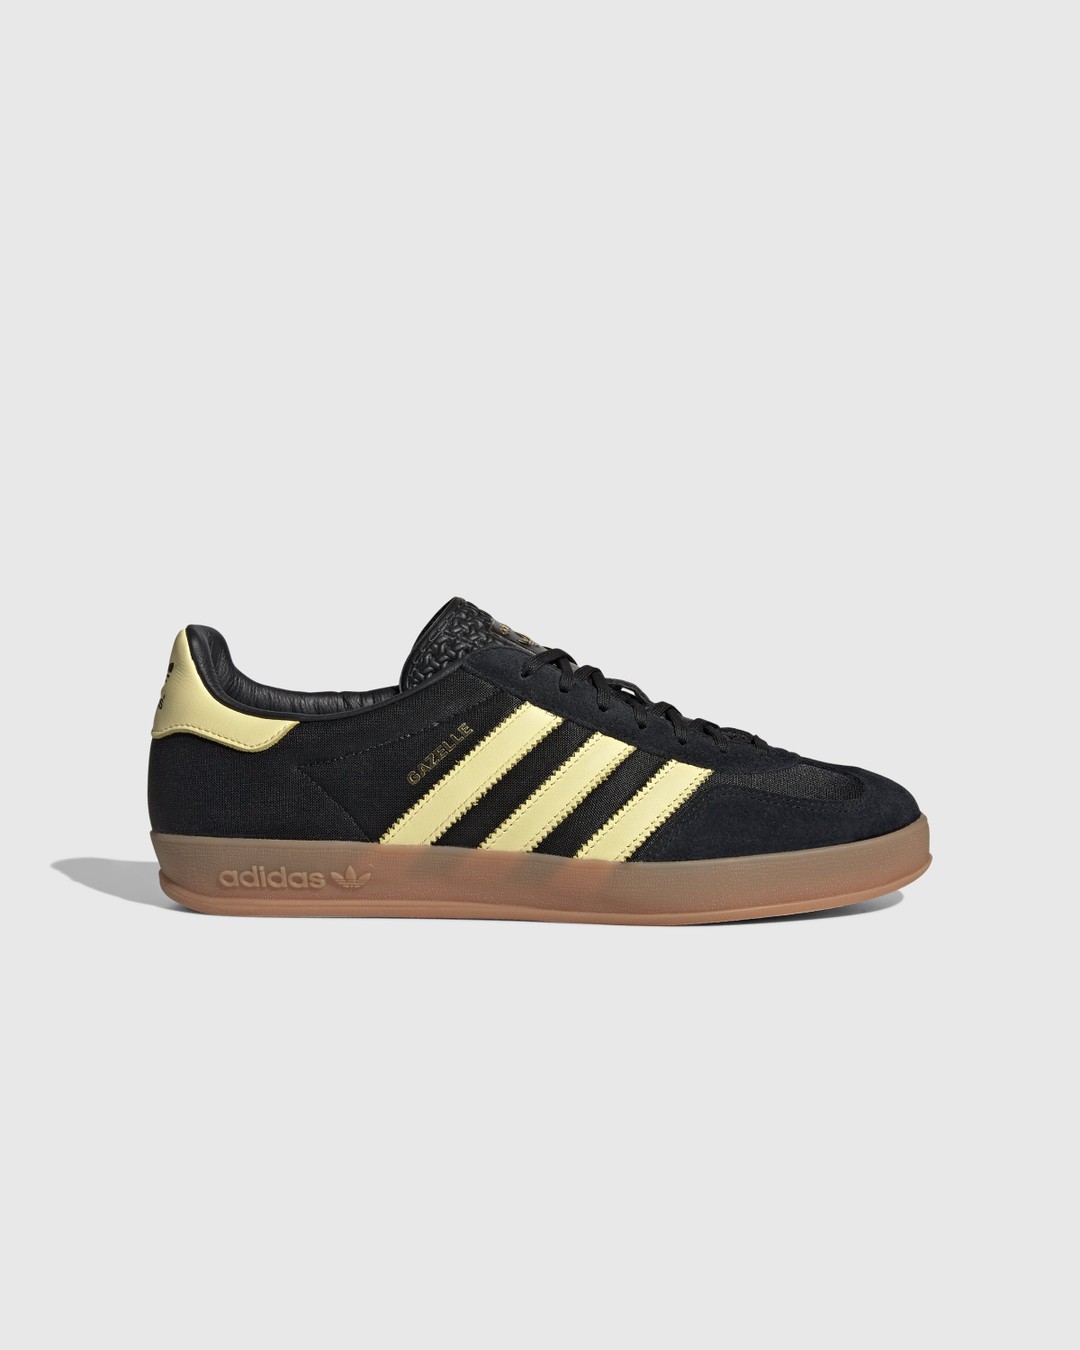 Adidas – Gazelle Core Black/Gum - Sneakers - Black - Image 1